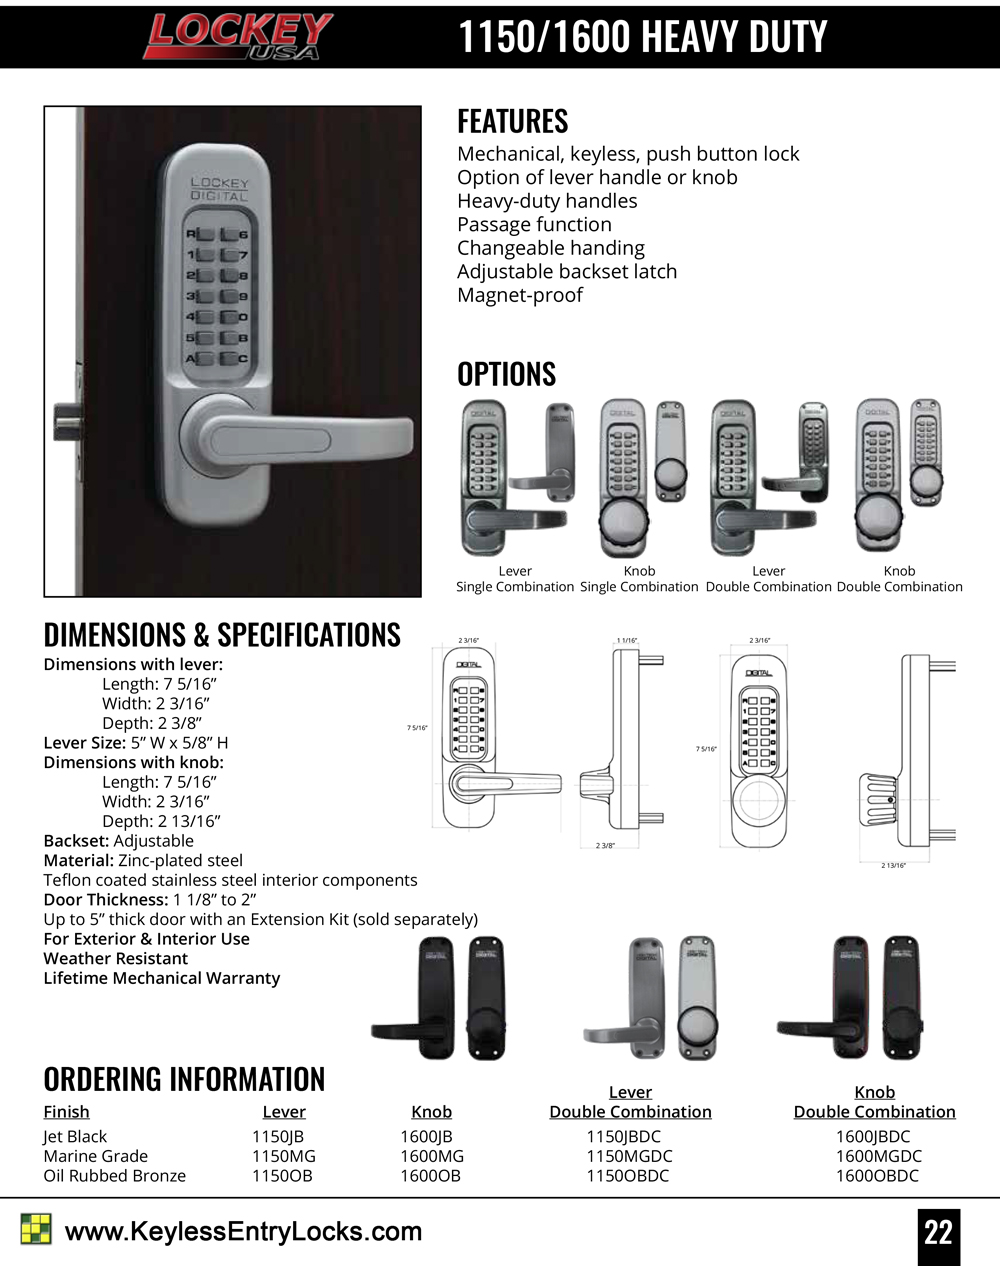 Lockey 1600 Heavy-Duty Knob-Handle Latchbolt Keypad Lock